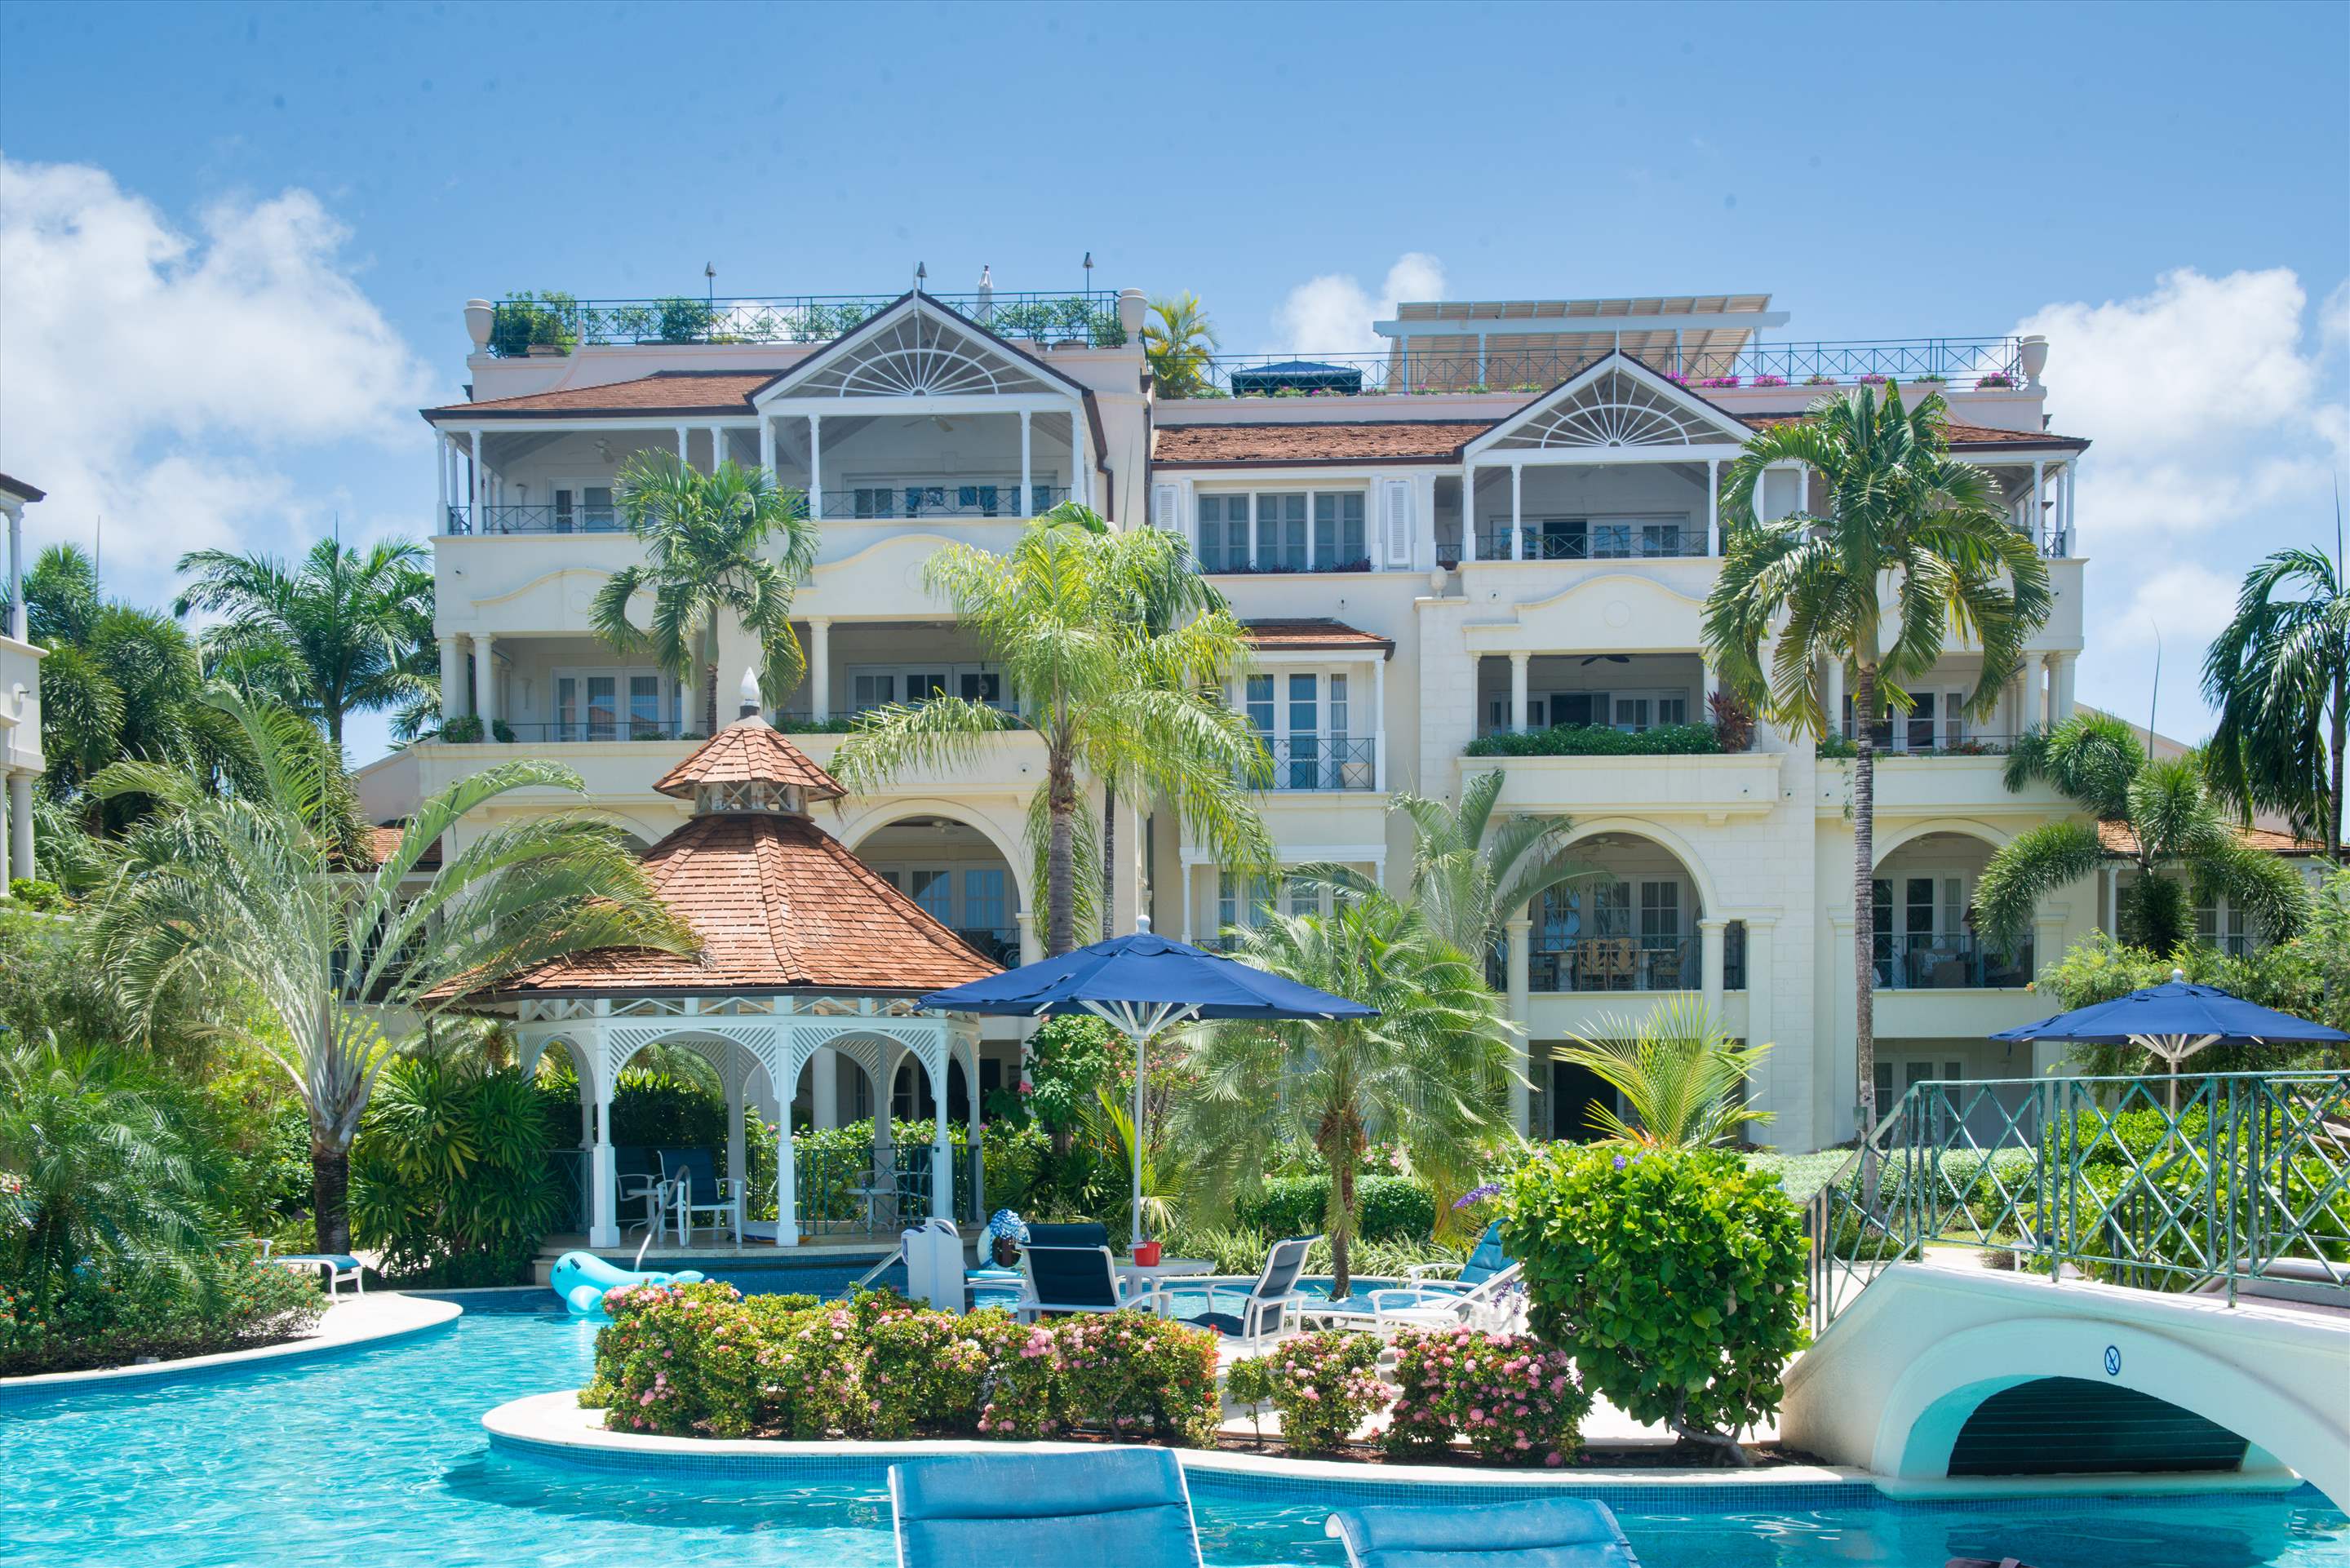 Schooner Bay 205, Three Bedroom rate, 3 bedroom apartment in St. James & West Coast, Barbados Photo #1